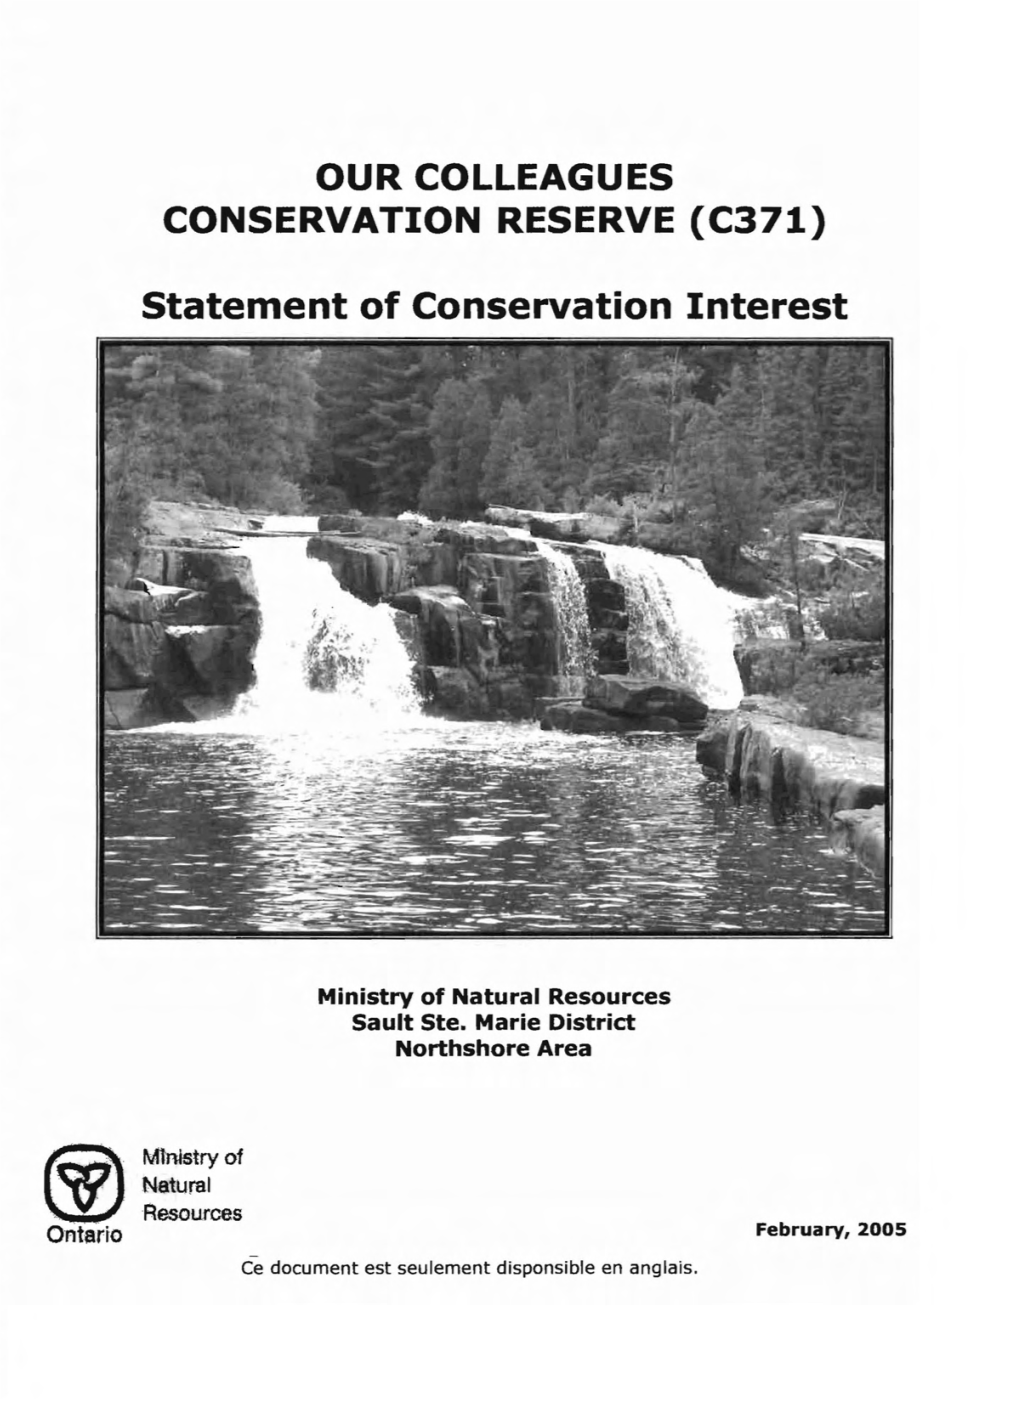 Statement of Conservation Interest